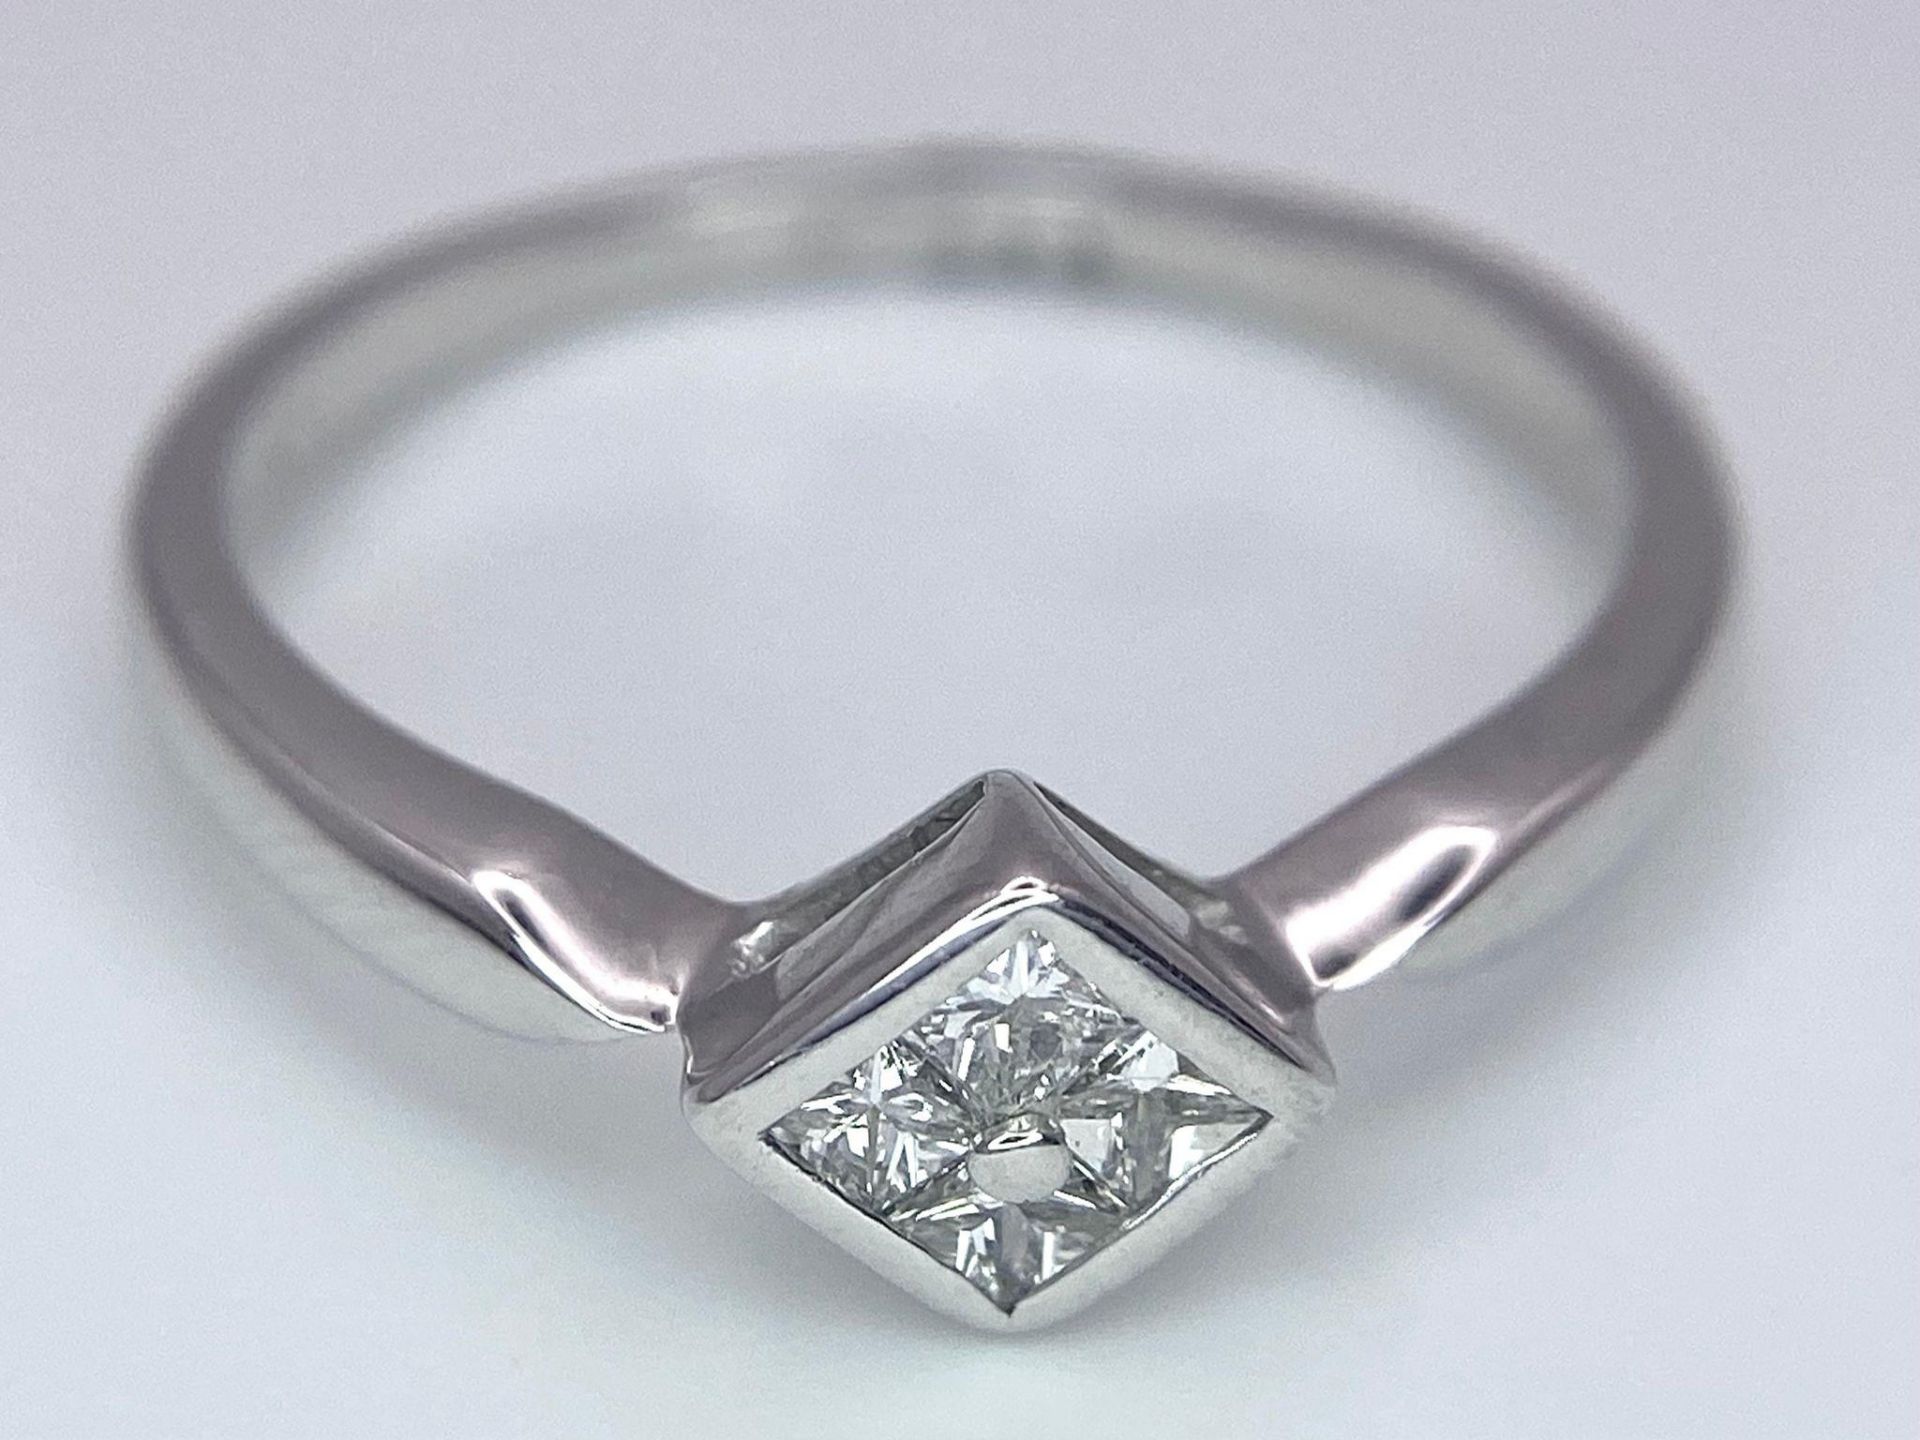 18K White Gold Diamond Cluster Ring, approx 0.20ct diamond weight, 2.8g total weight, size M 1/2 - Bild 4 aus 6